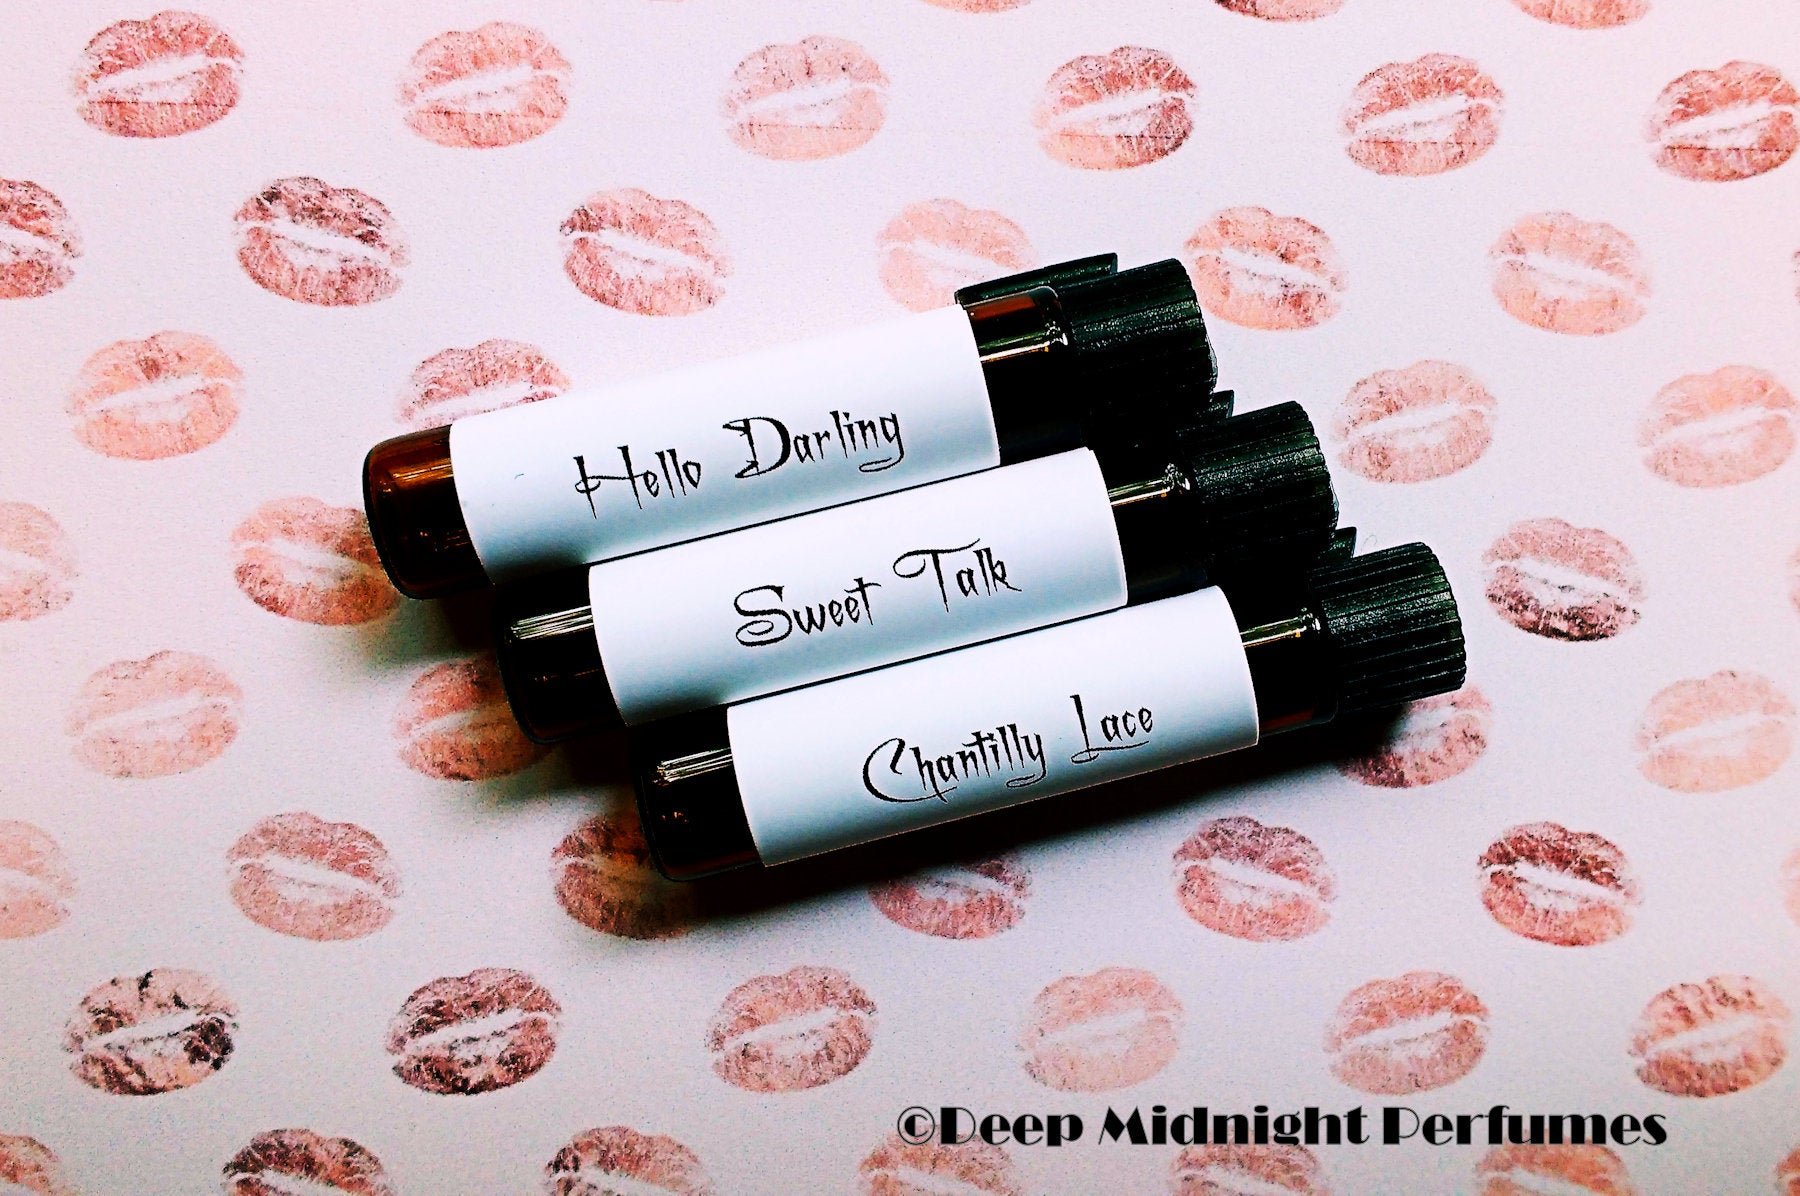 RETRO GIRLS™ Perfume Sampler Set - Three Sample Vials - Deep Midnight Perfumes - Fantasy Perfume